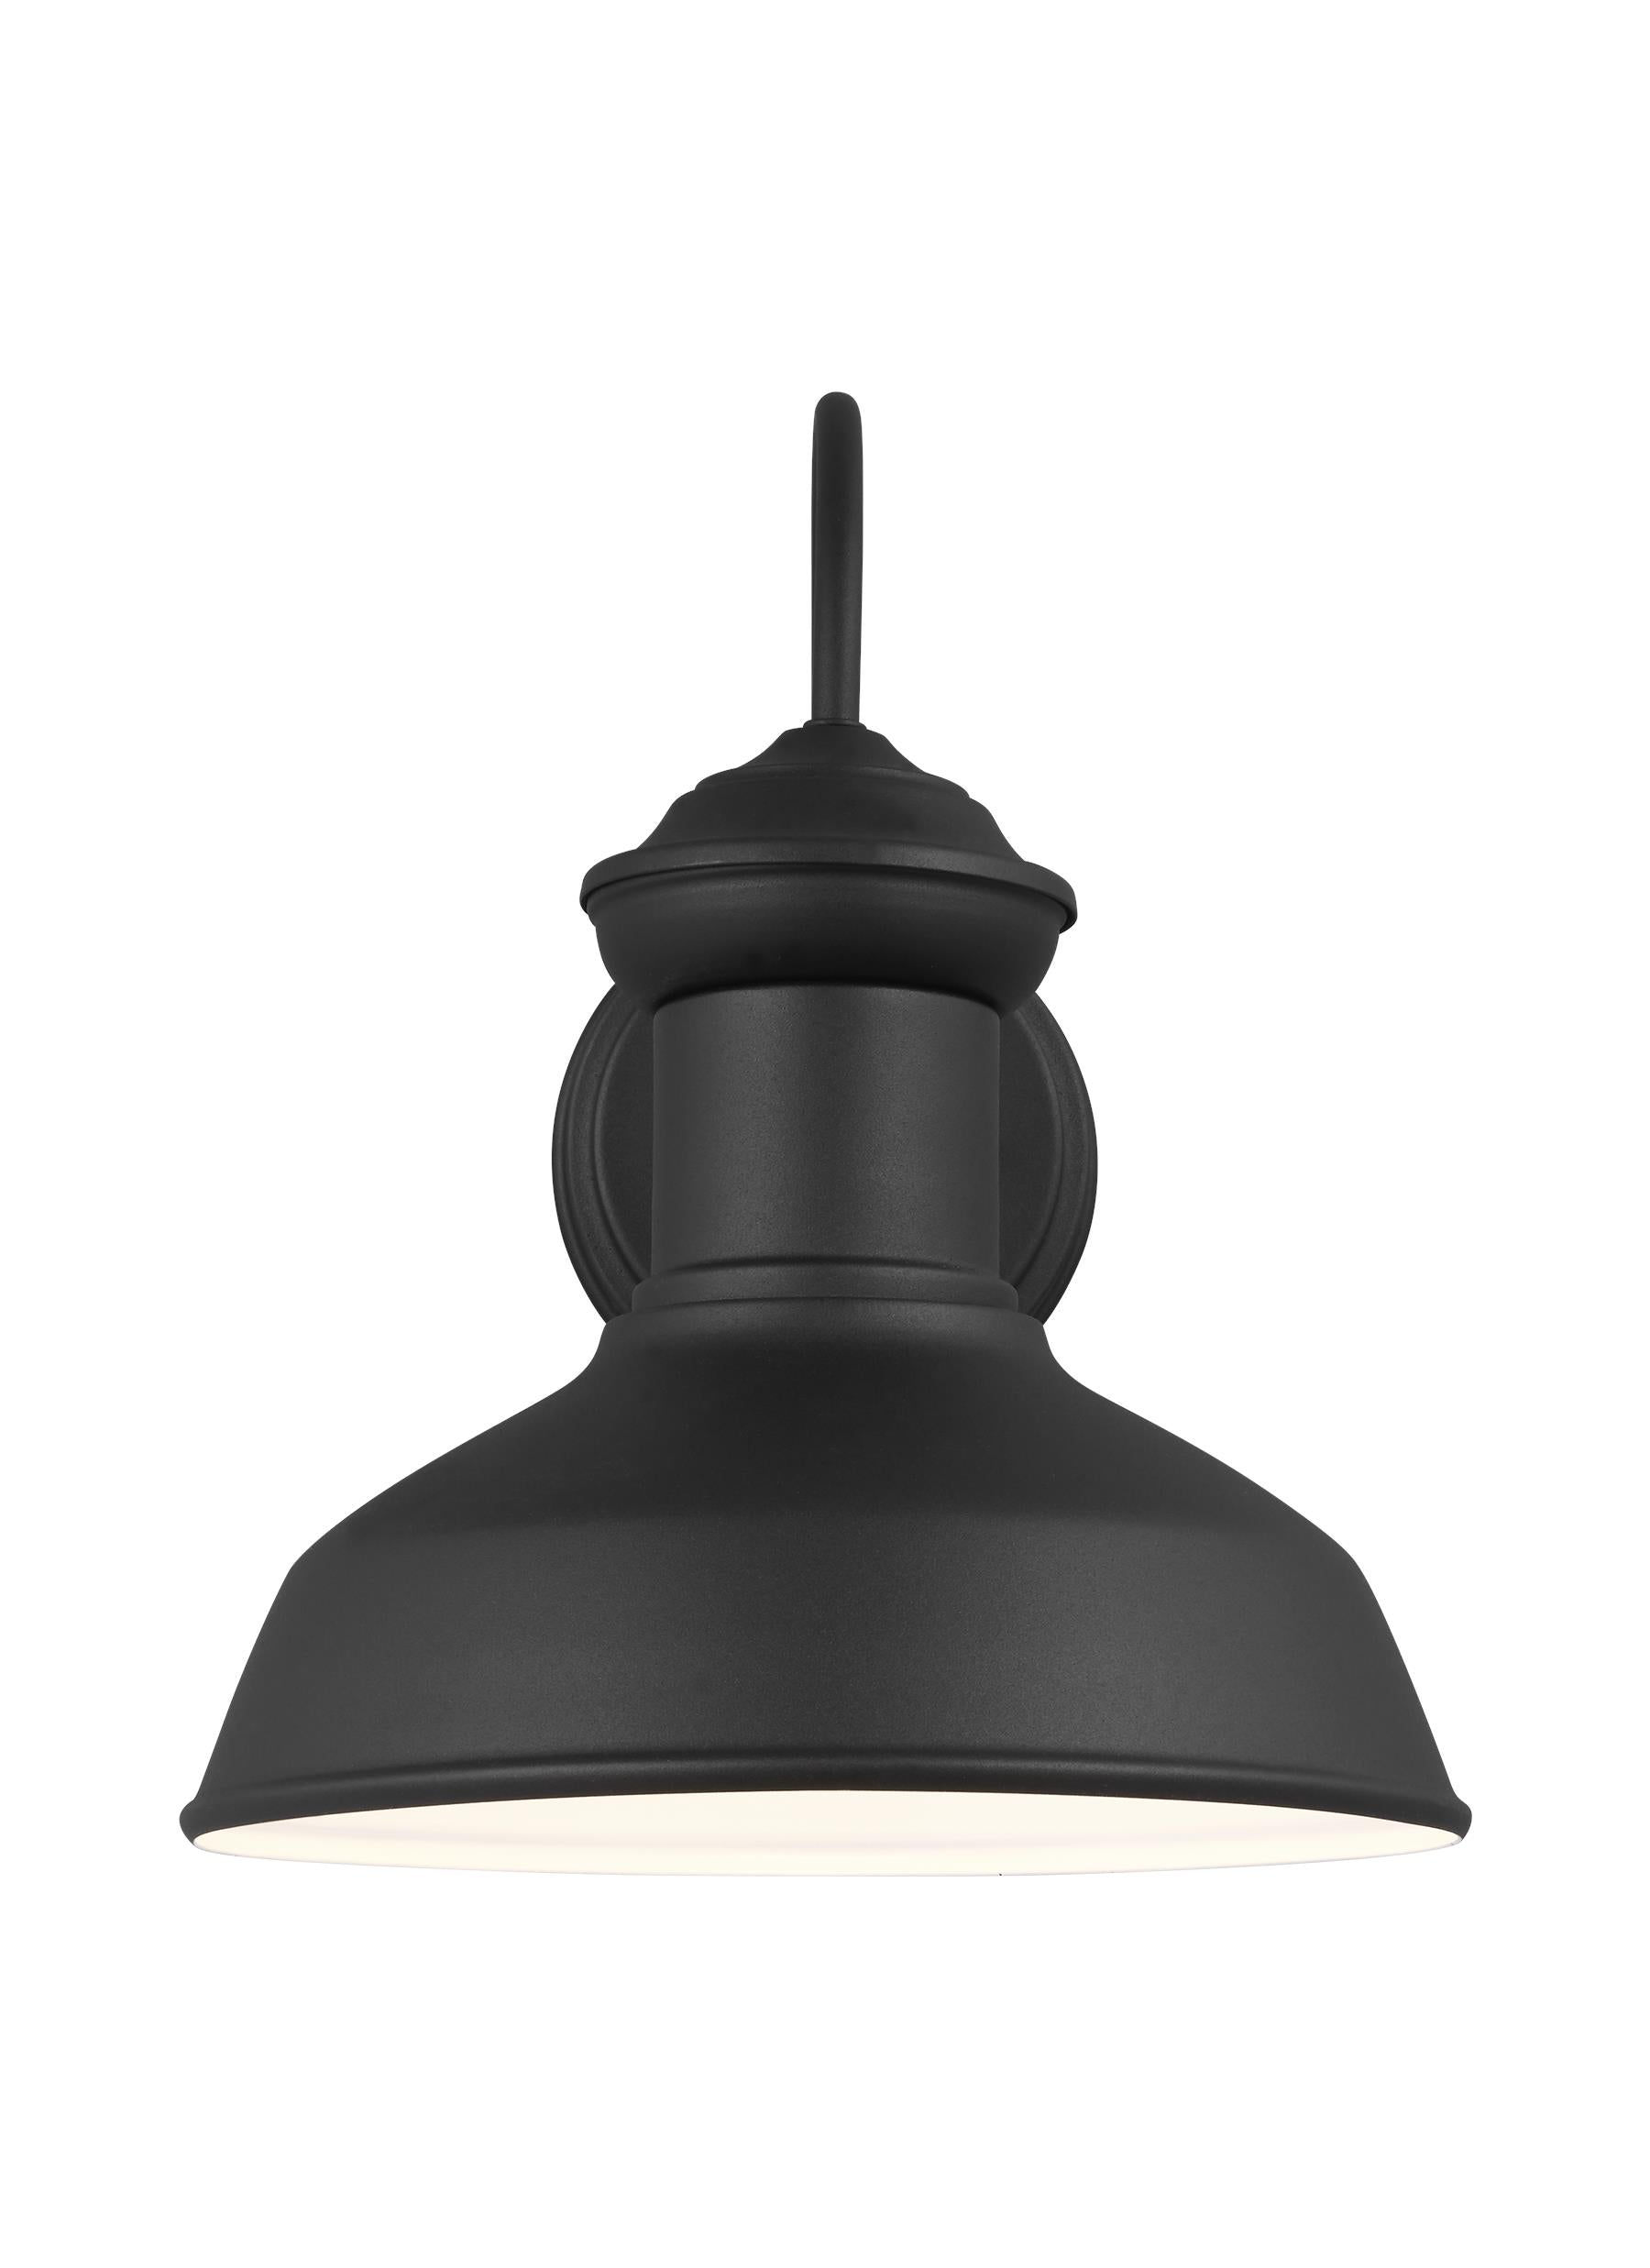 Fredricksburg traditional 1-light outdoor exterior Dark Sky compliant small wall lantern sconce in black finish